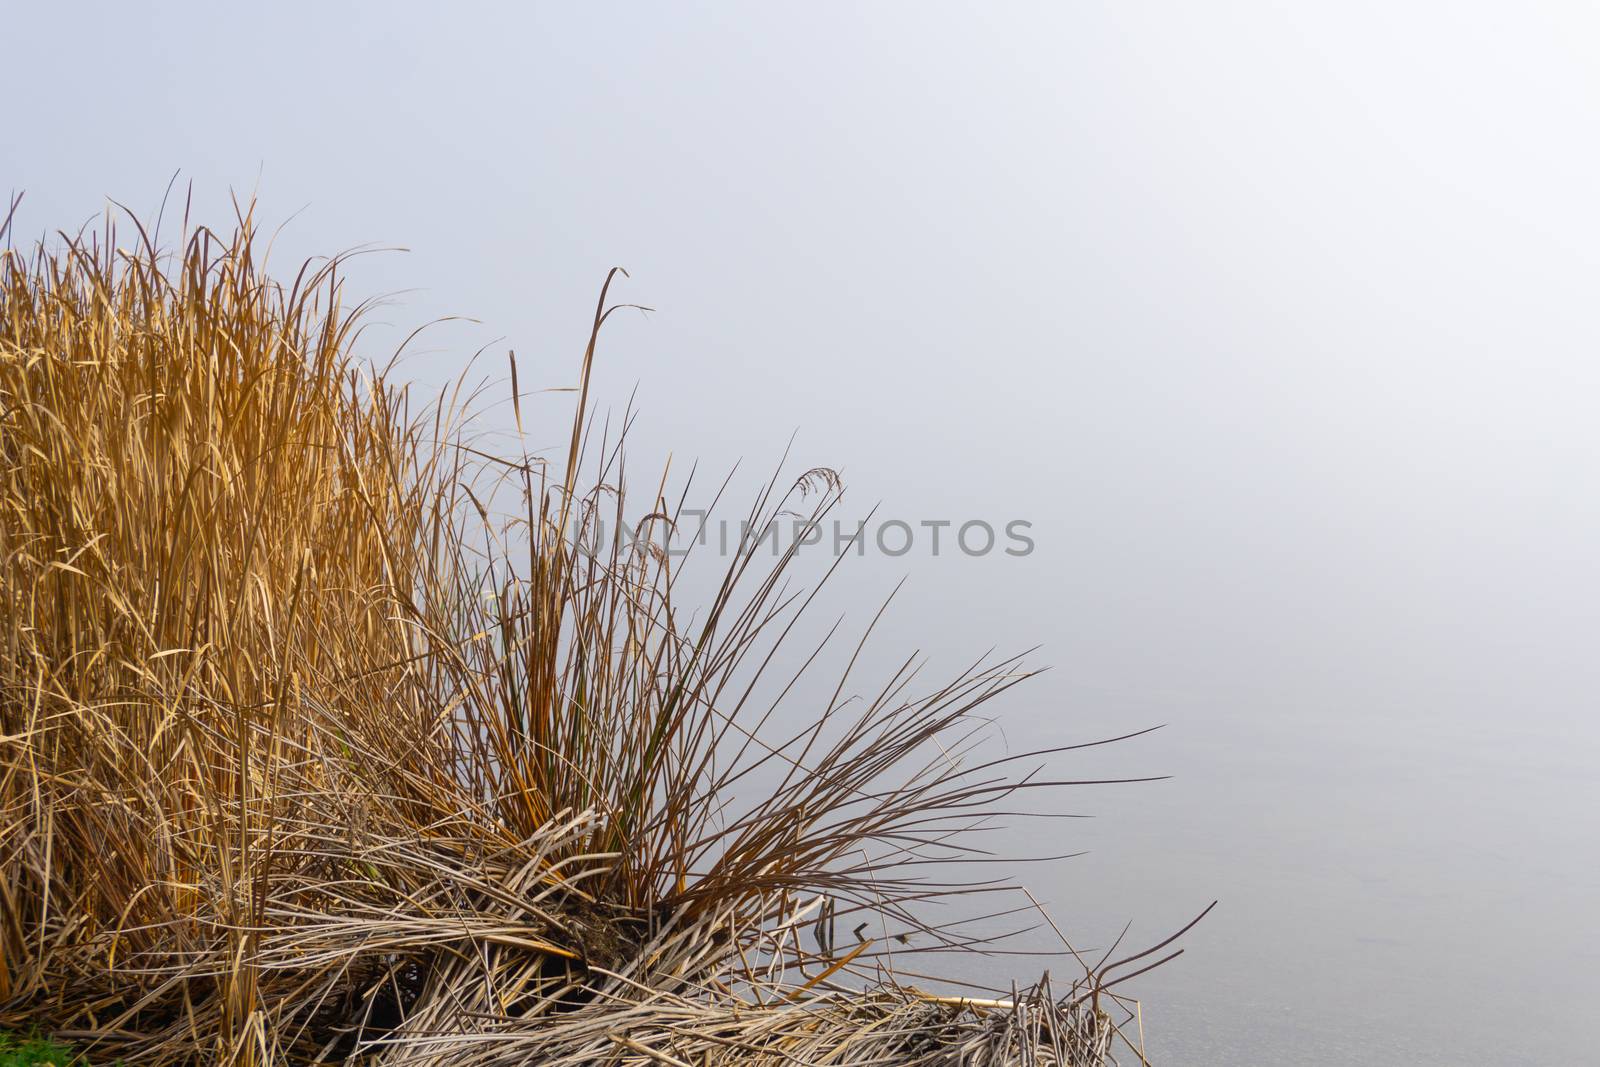 Misty background to dry bulrushes and reeds on edge of lake Okareka.